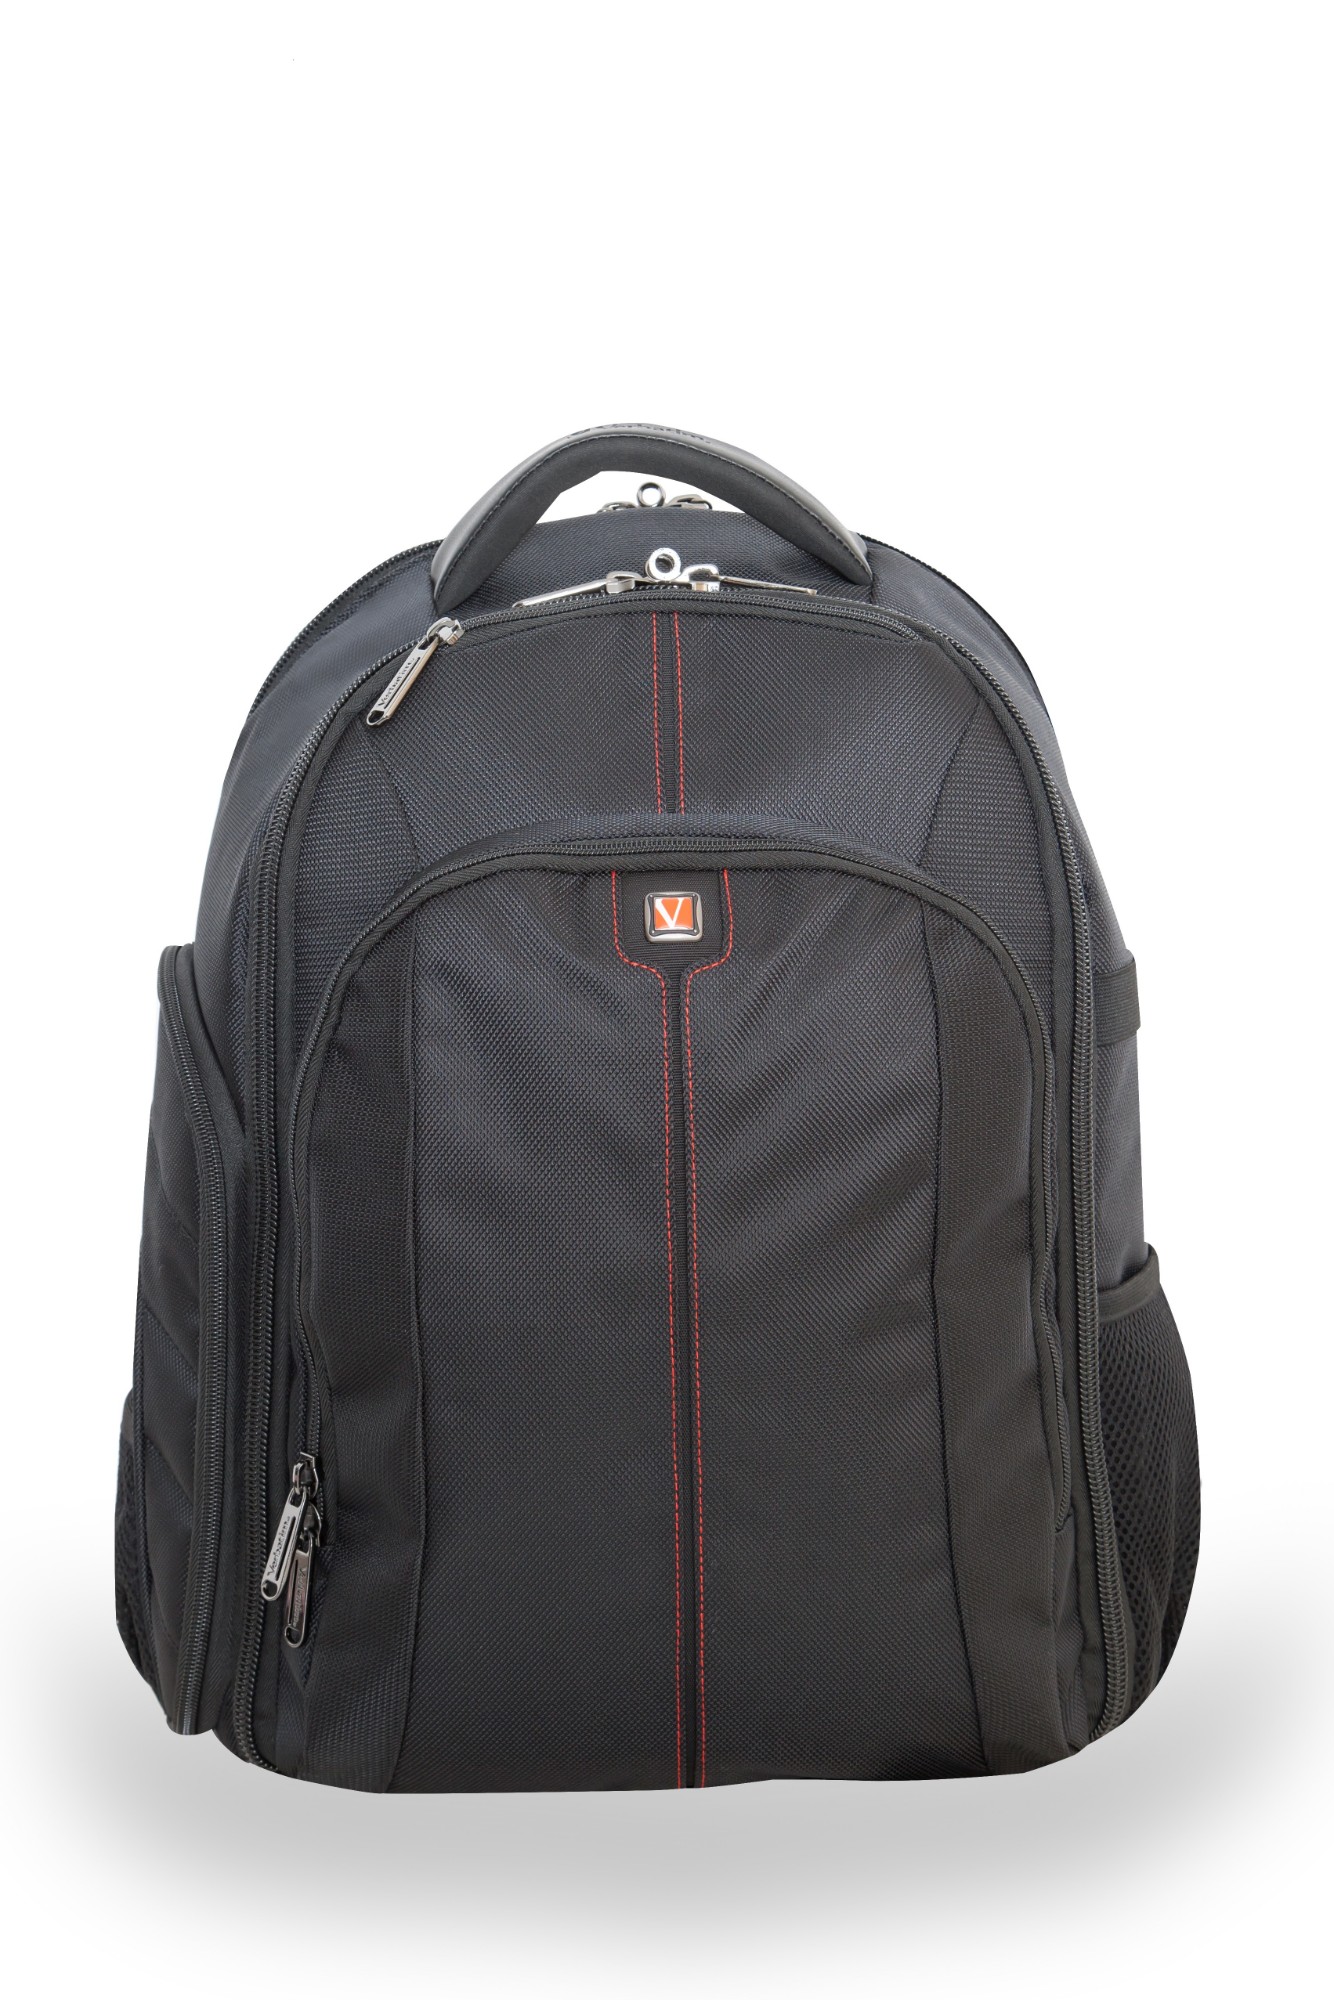 Verbatim Melbourne backpack Black